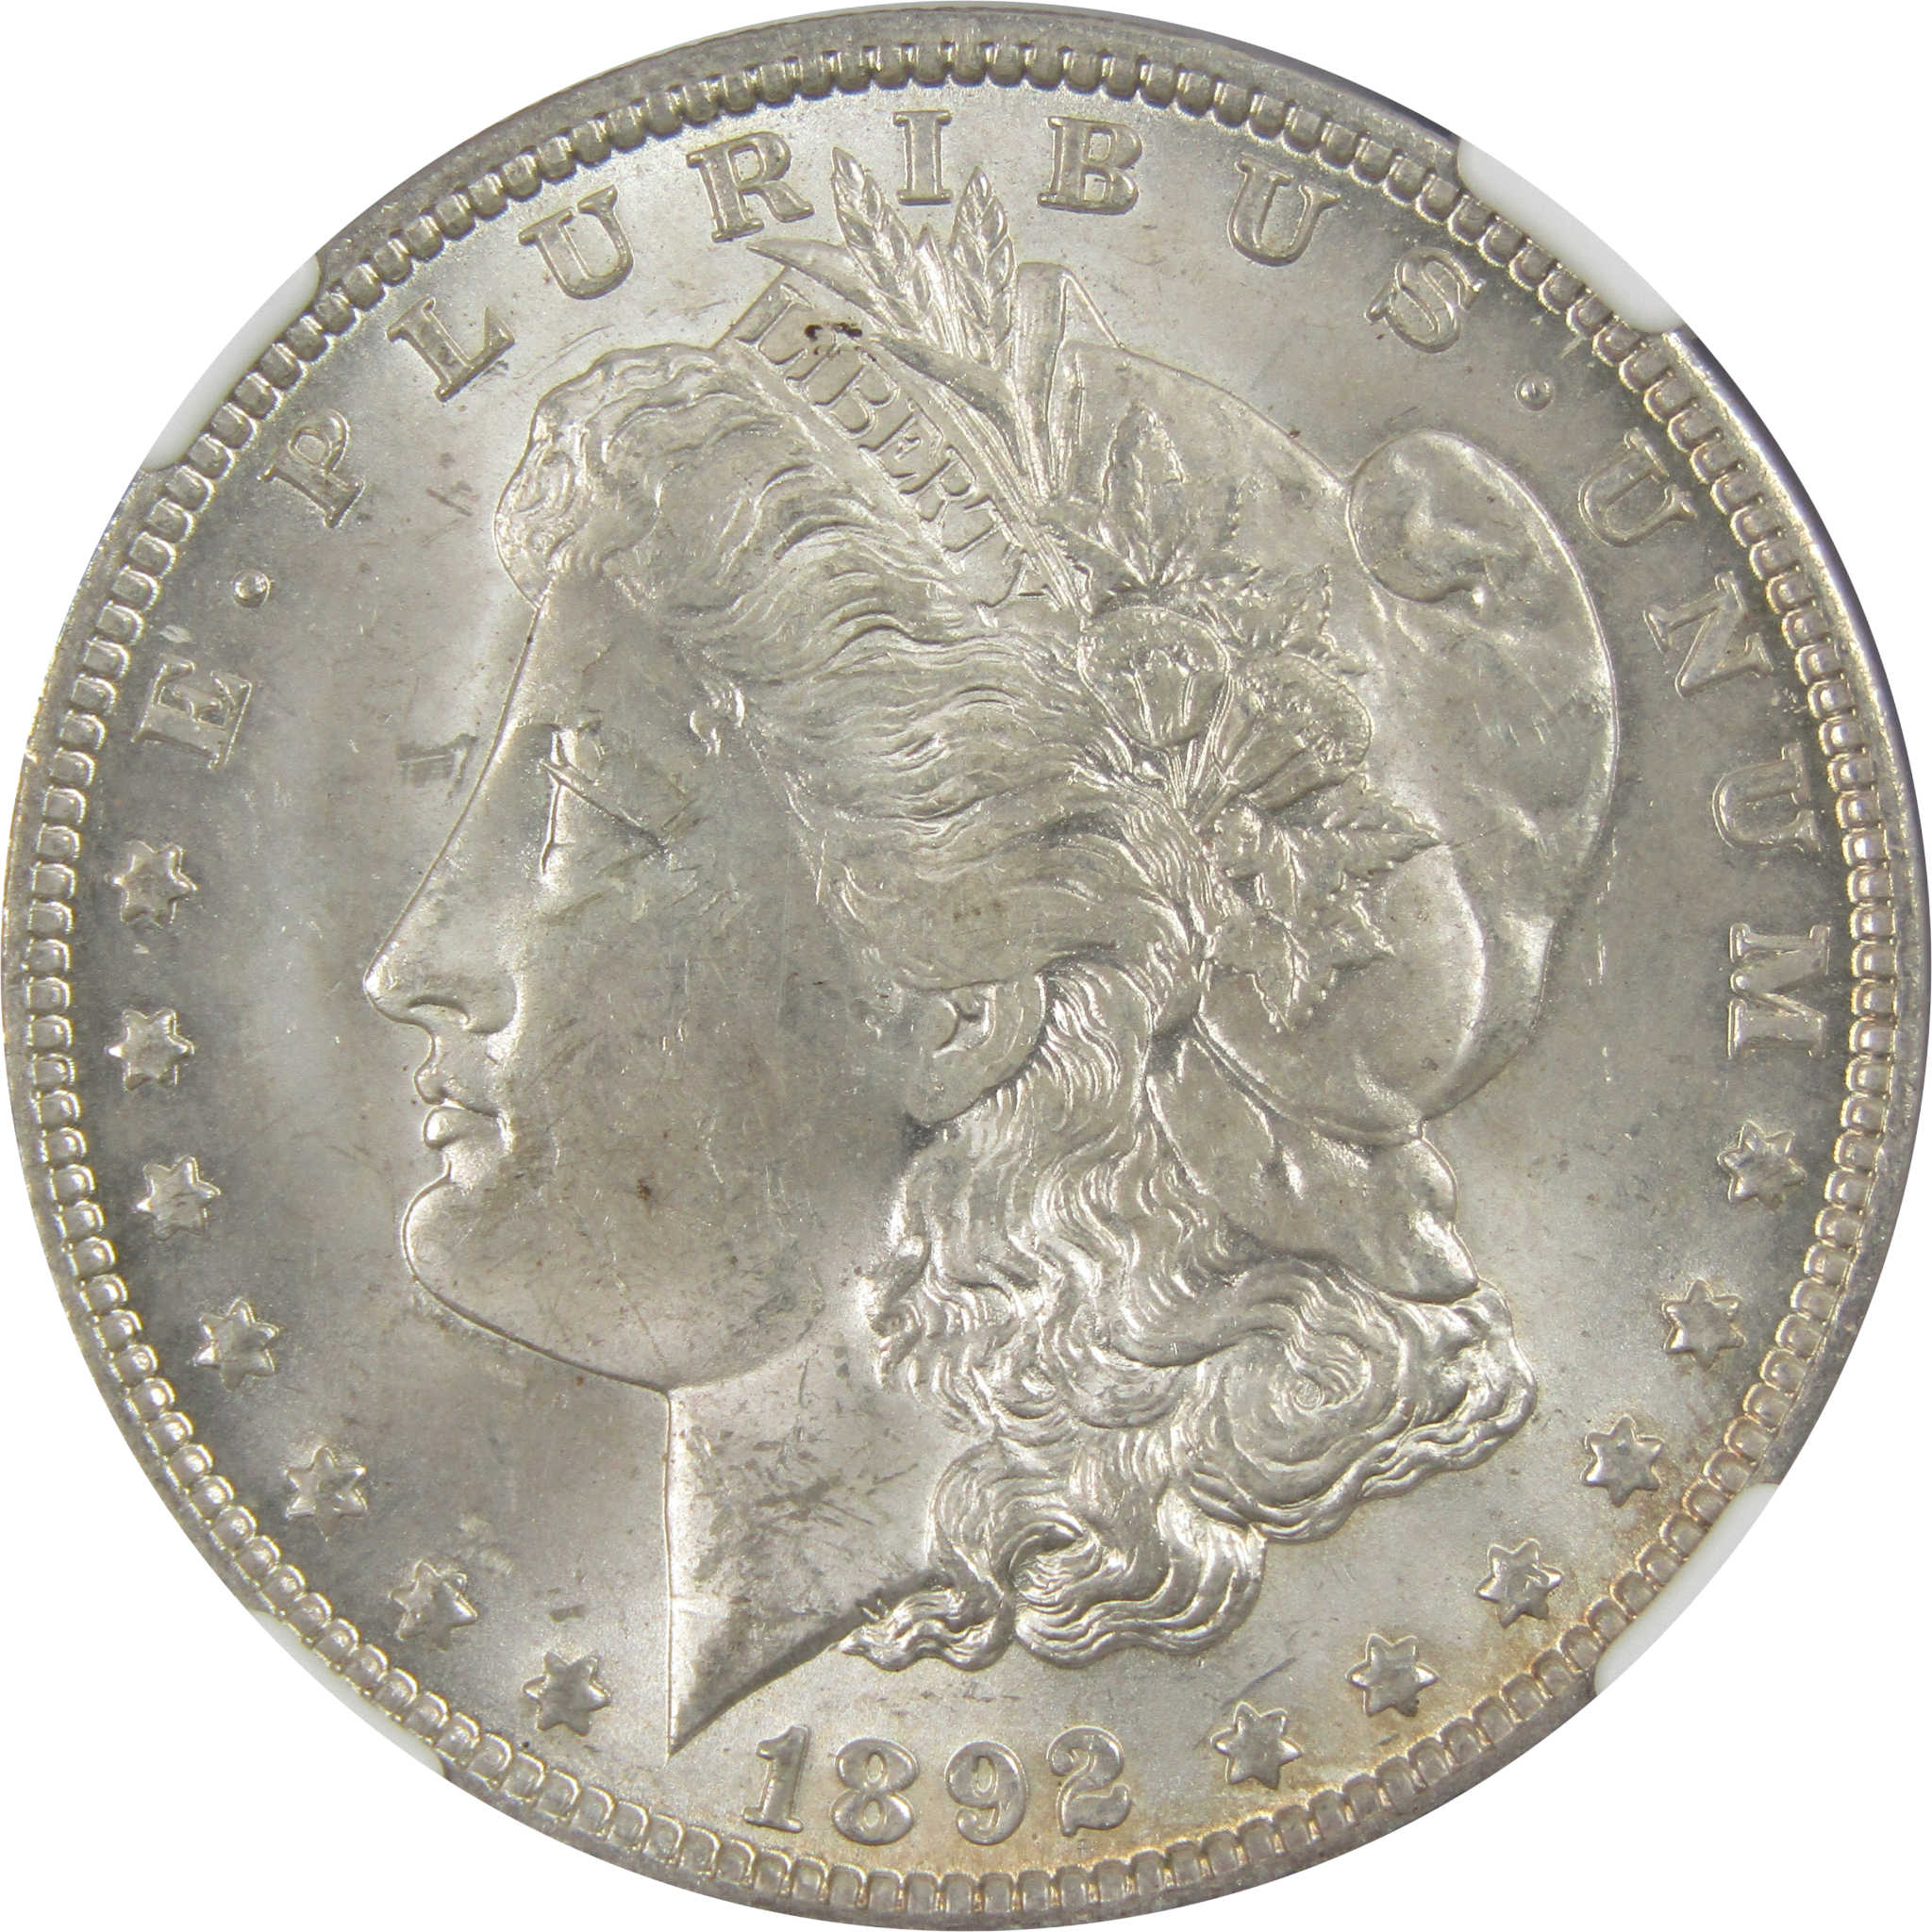 1892 O Morgan Dollar MS 62 NGC 90% Silver $1 Uncirculated SKU:I7046 - Morgan coin - Morgan silver dollar - Morgan silver dollar for sale - Profile Coins &amp; Collectibles